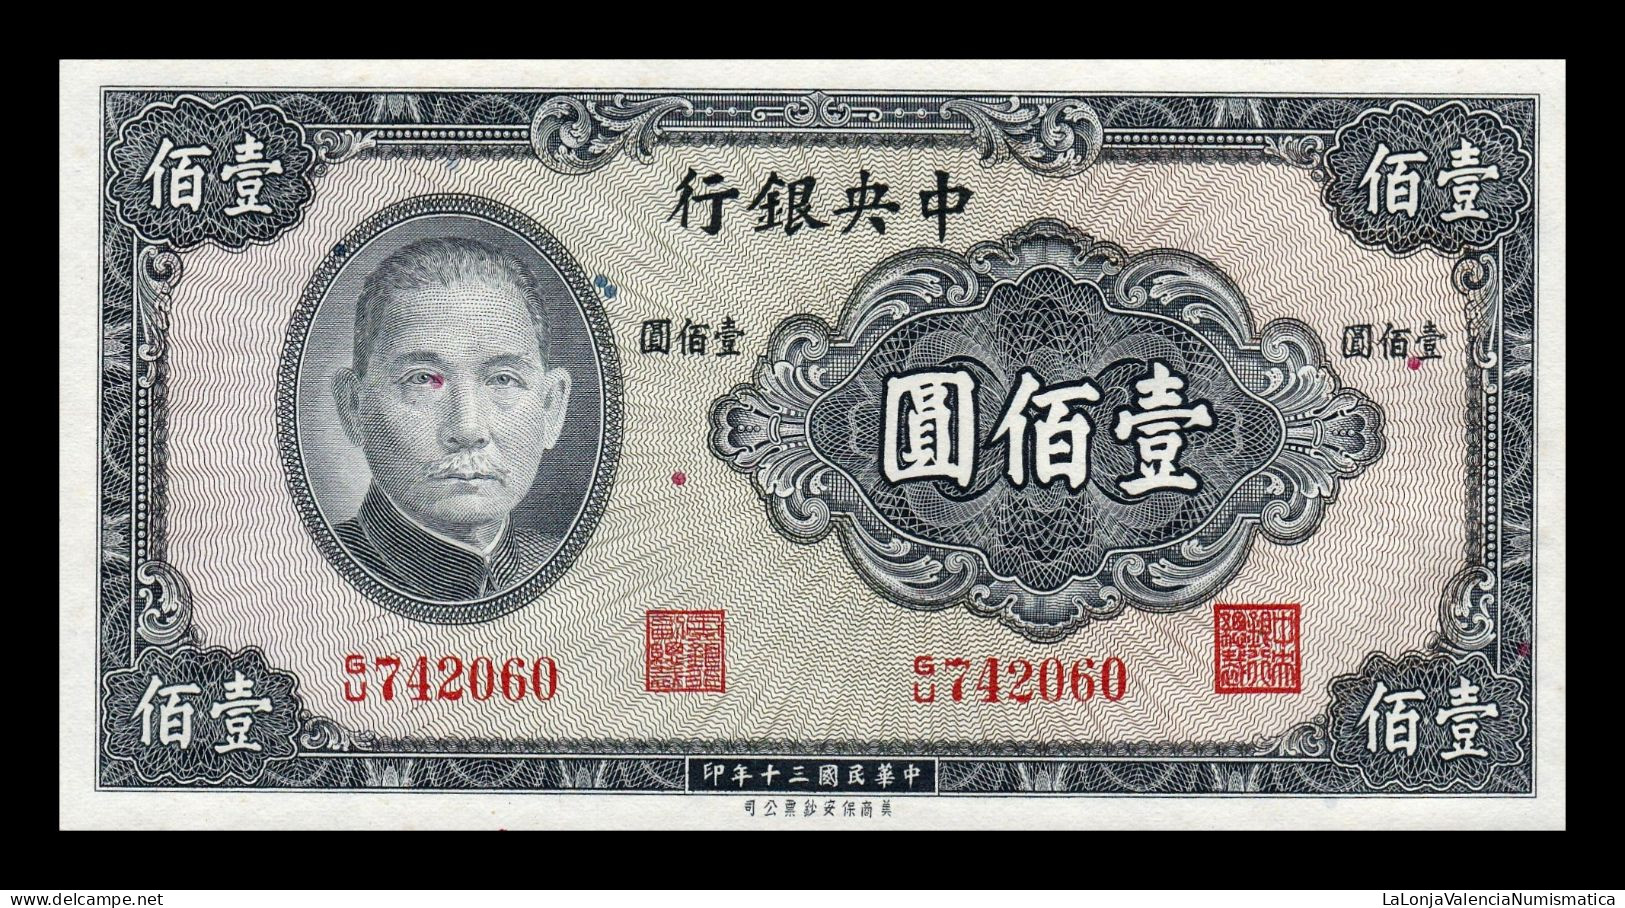 China 100 Yuan Dr. Sun Yat-sen 1941 Pick 243a Sc Unc - China